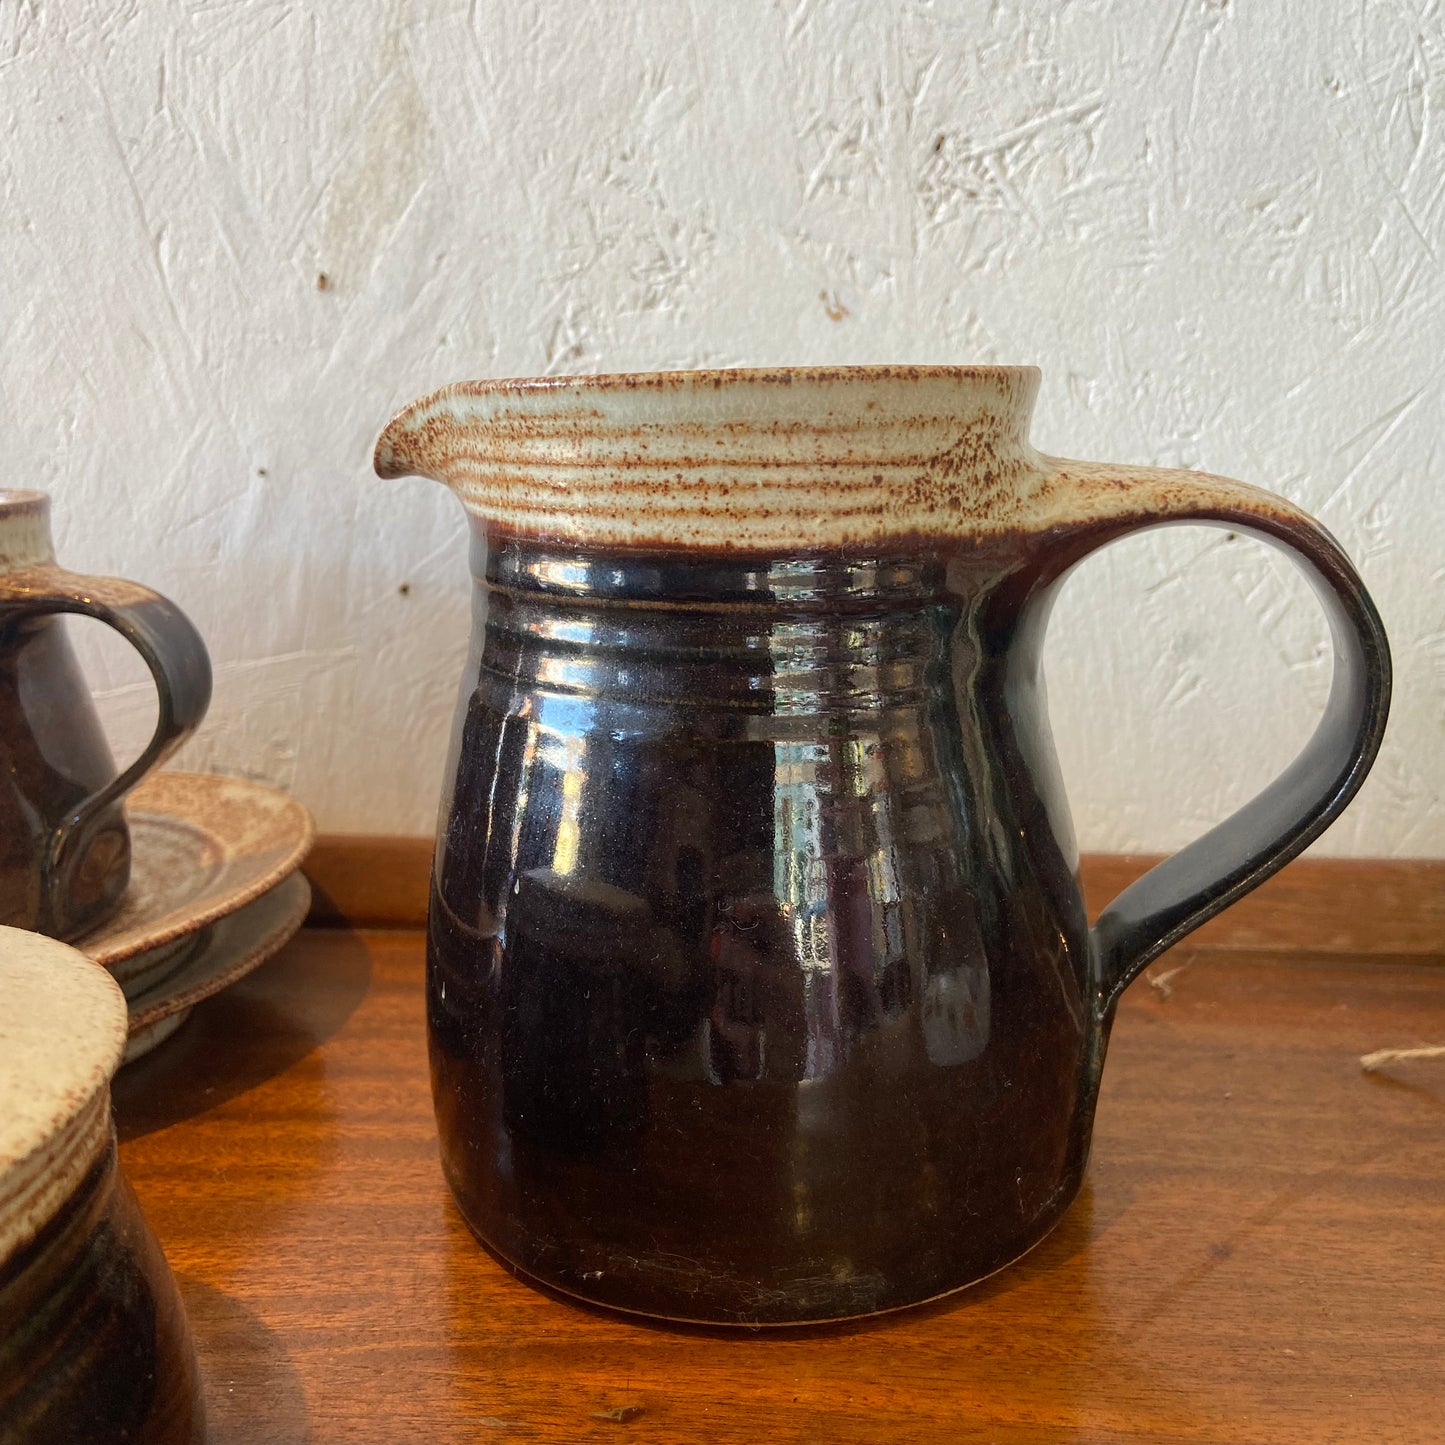 Vintage Studio Pottery Tea Set